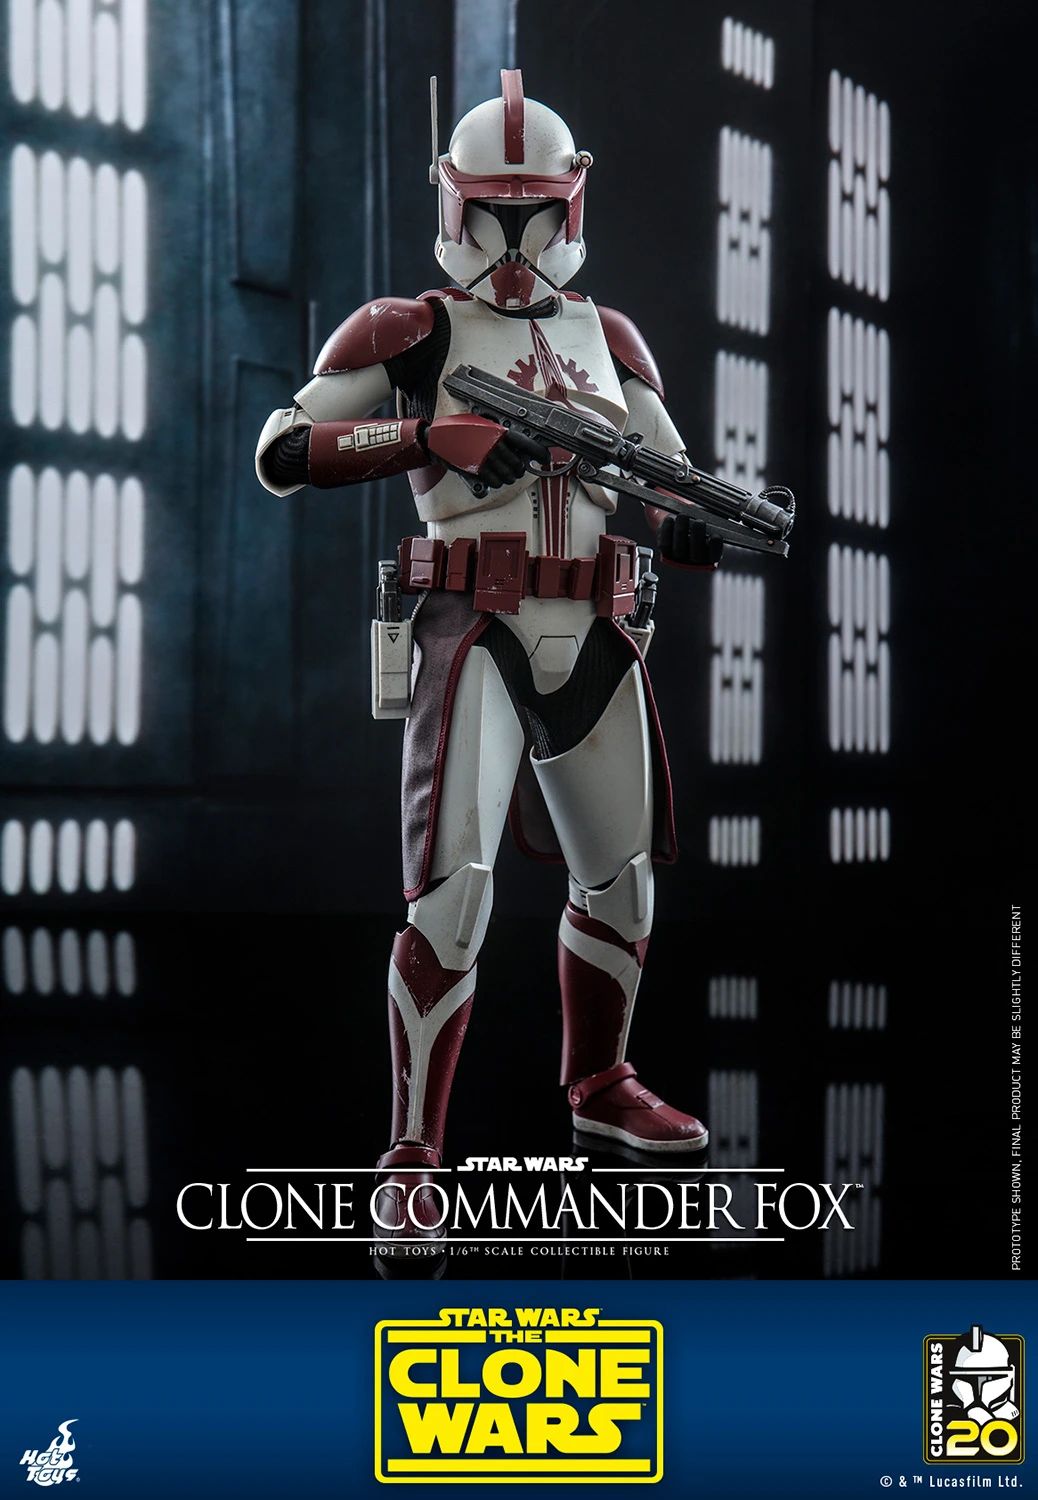 Hot Toys Star Wars Clone Commander Fox